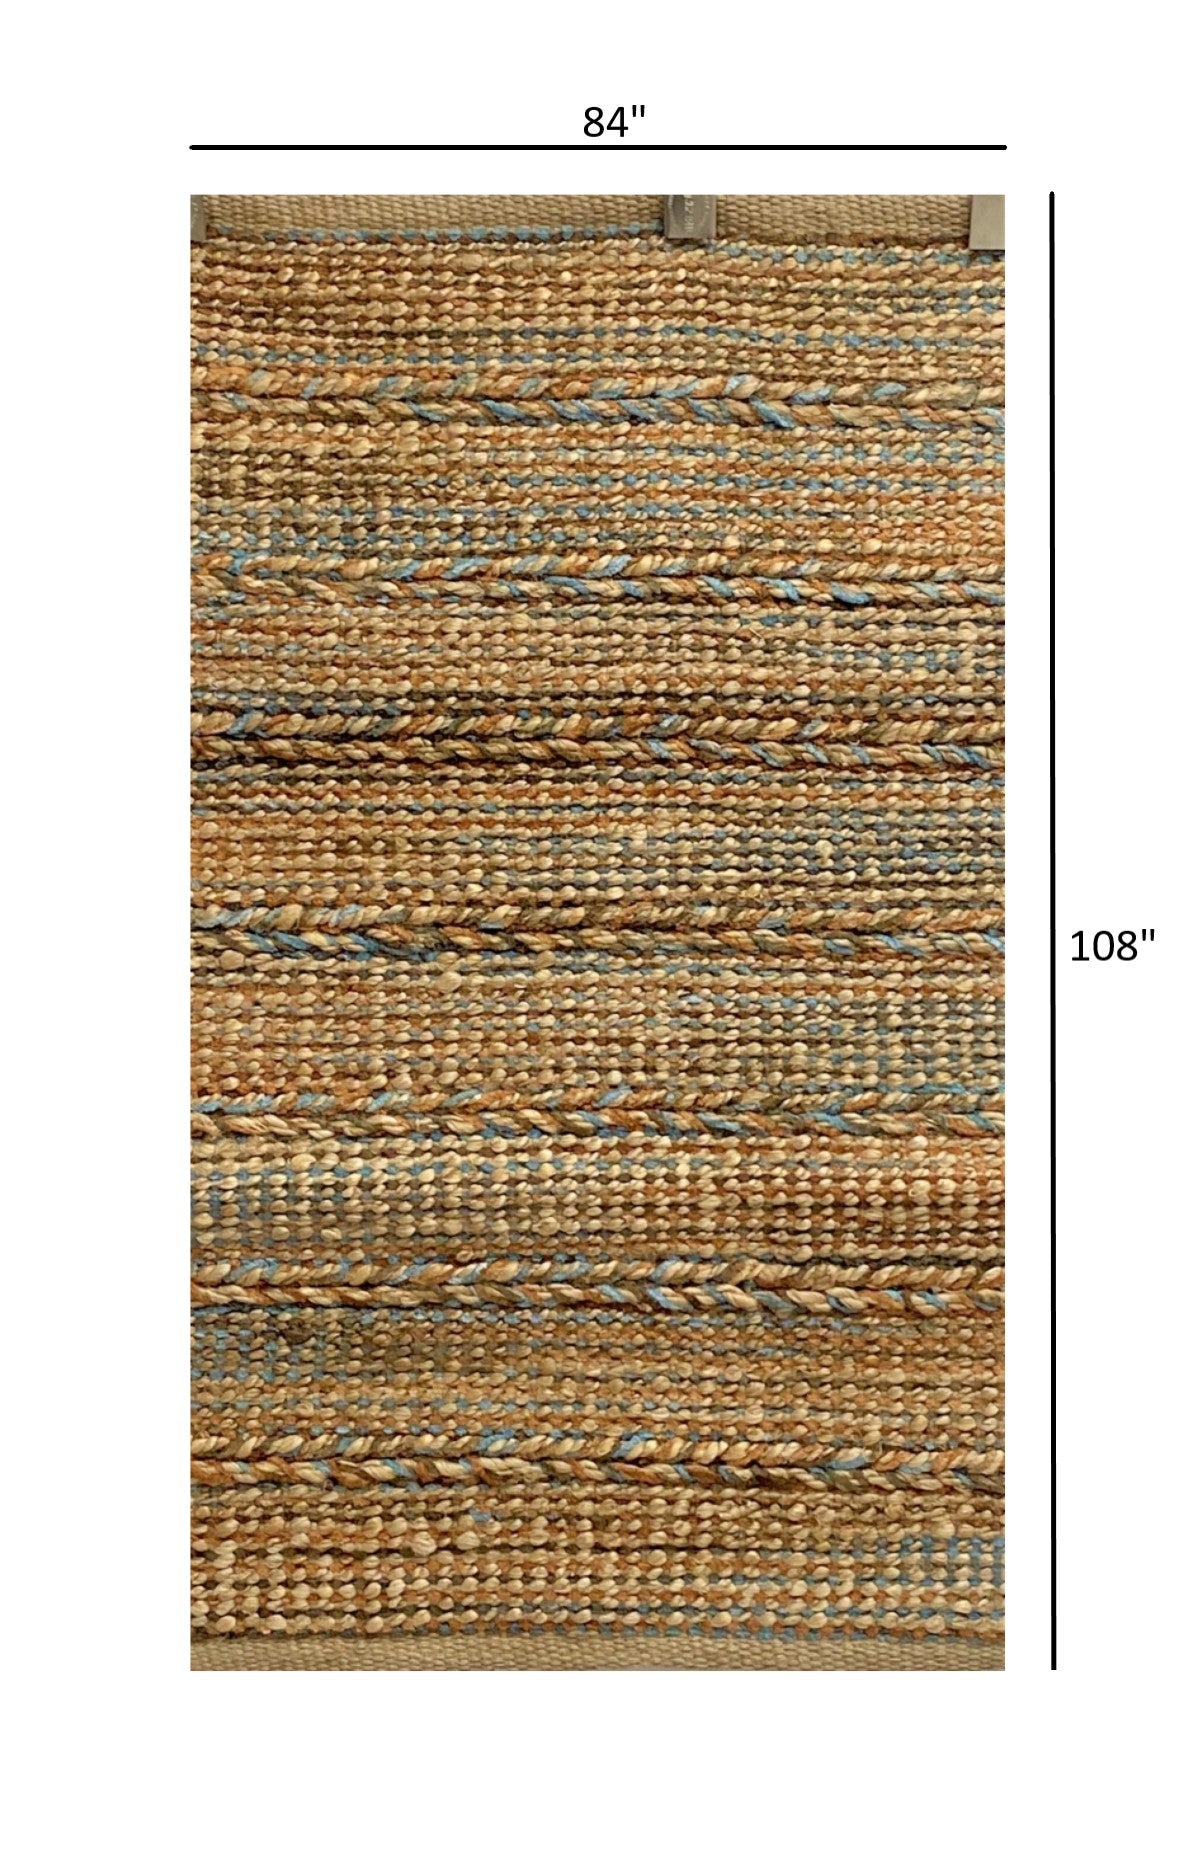 7’ x 9’ Seafoam and Tan Braided Stripe Area Rug